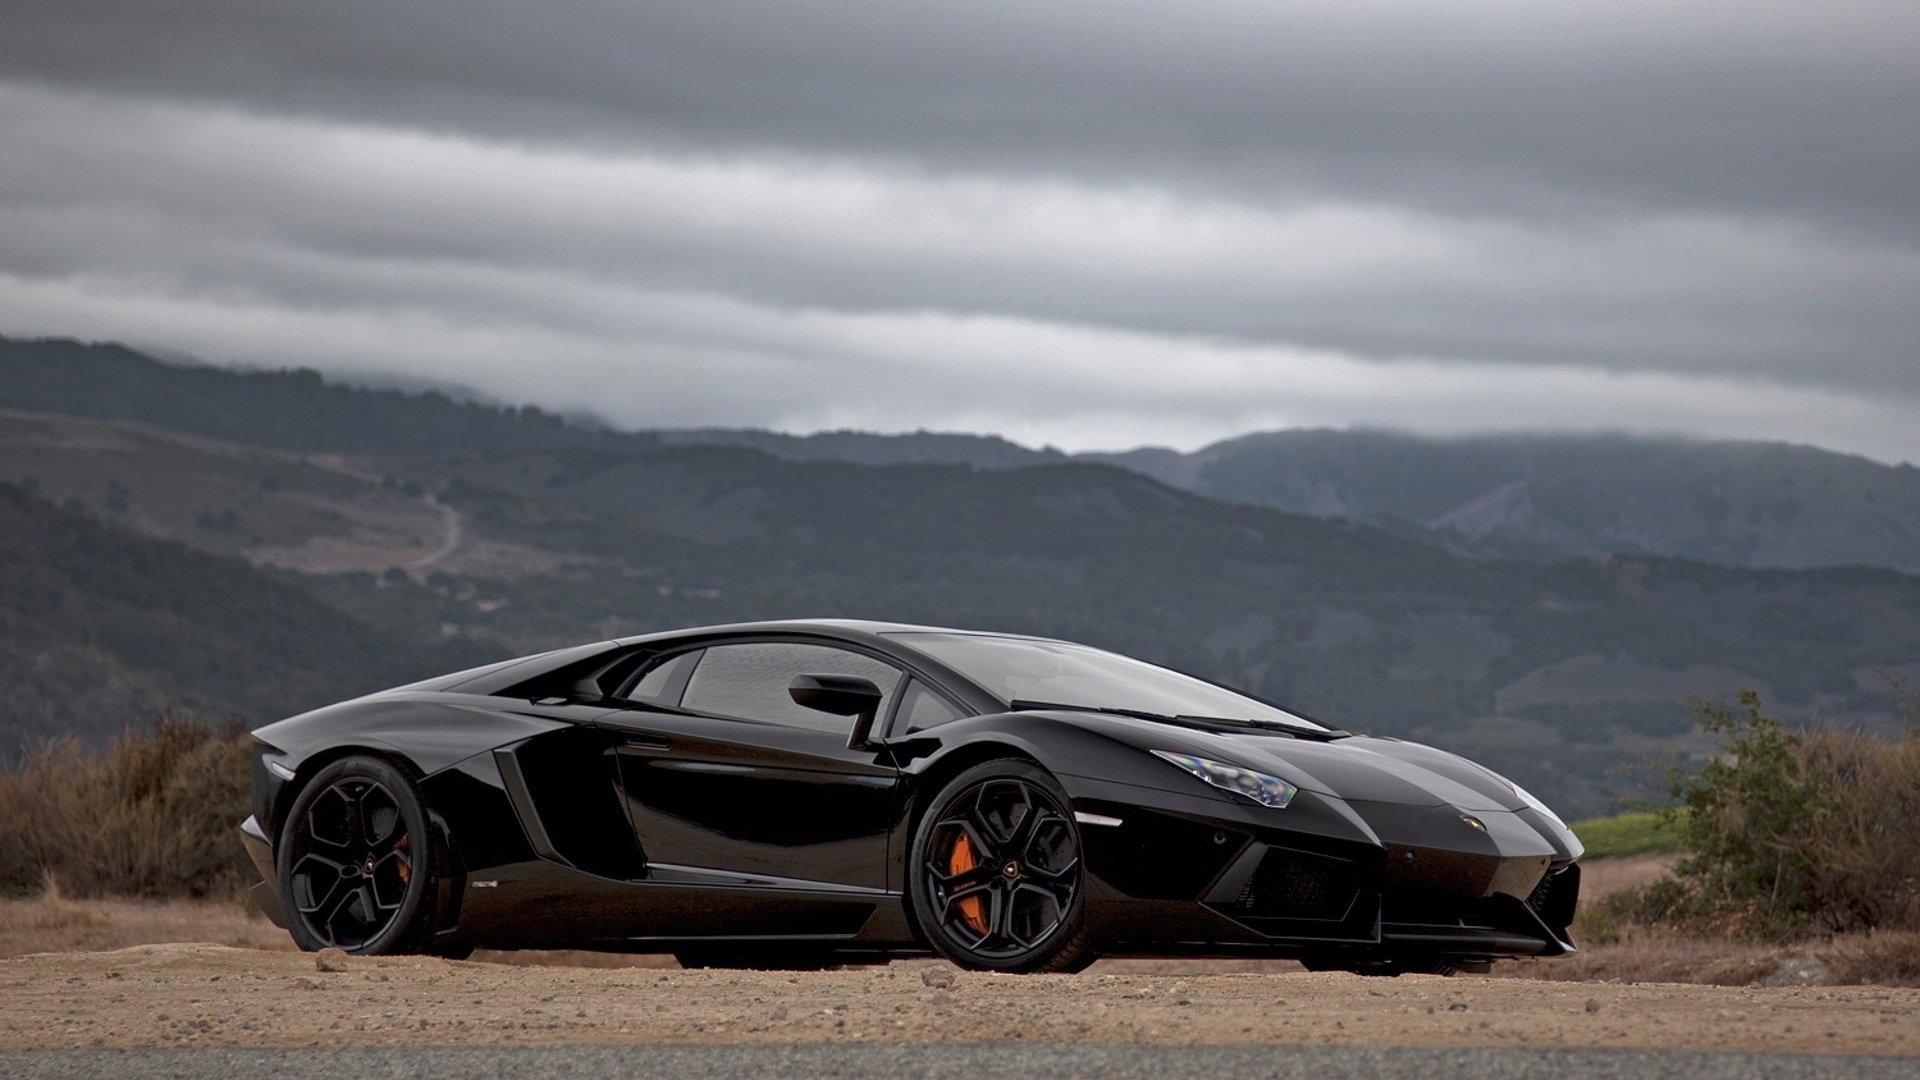 Lamborghini Aventador Black 1080p HD Wallpaper 326 Car   bwalles